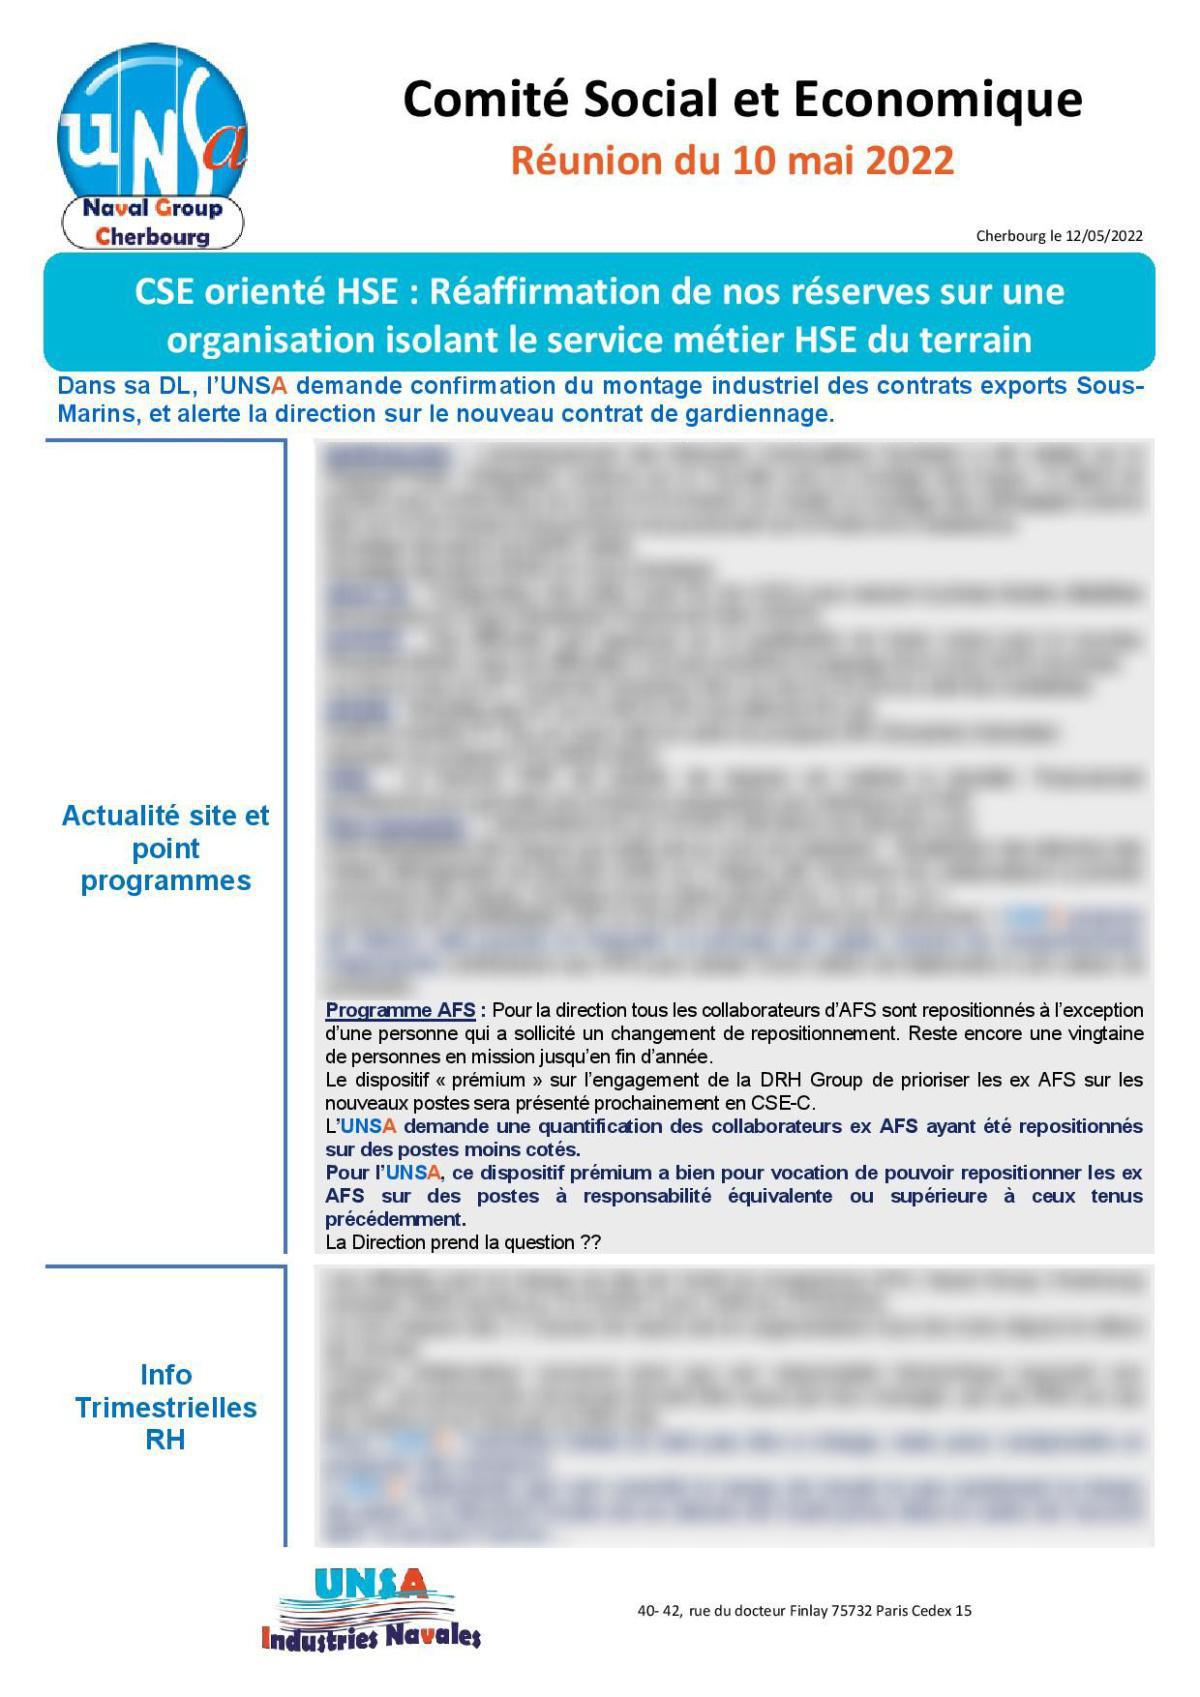 CSE de Cherbourg - Réunion du 10 mai 2022 - Compte Rendu